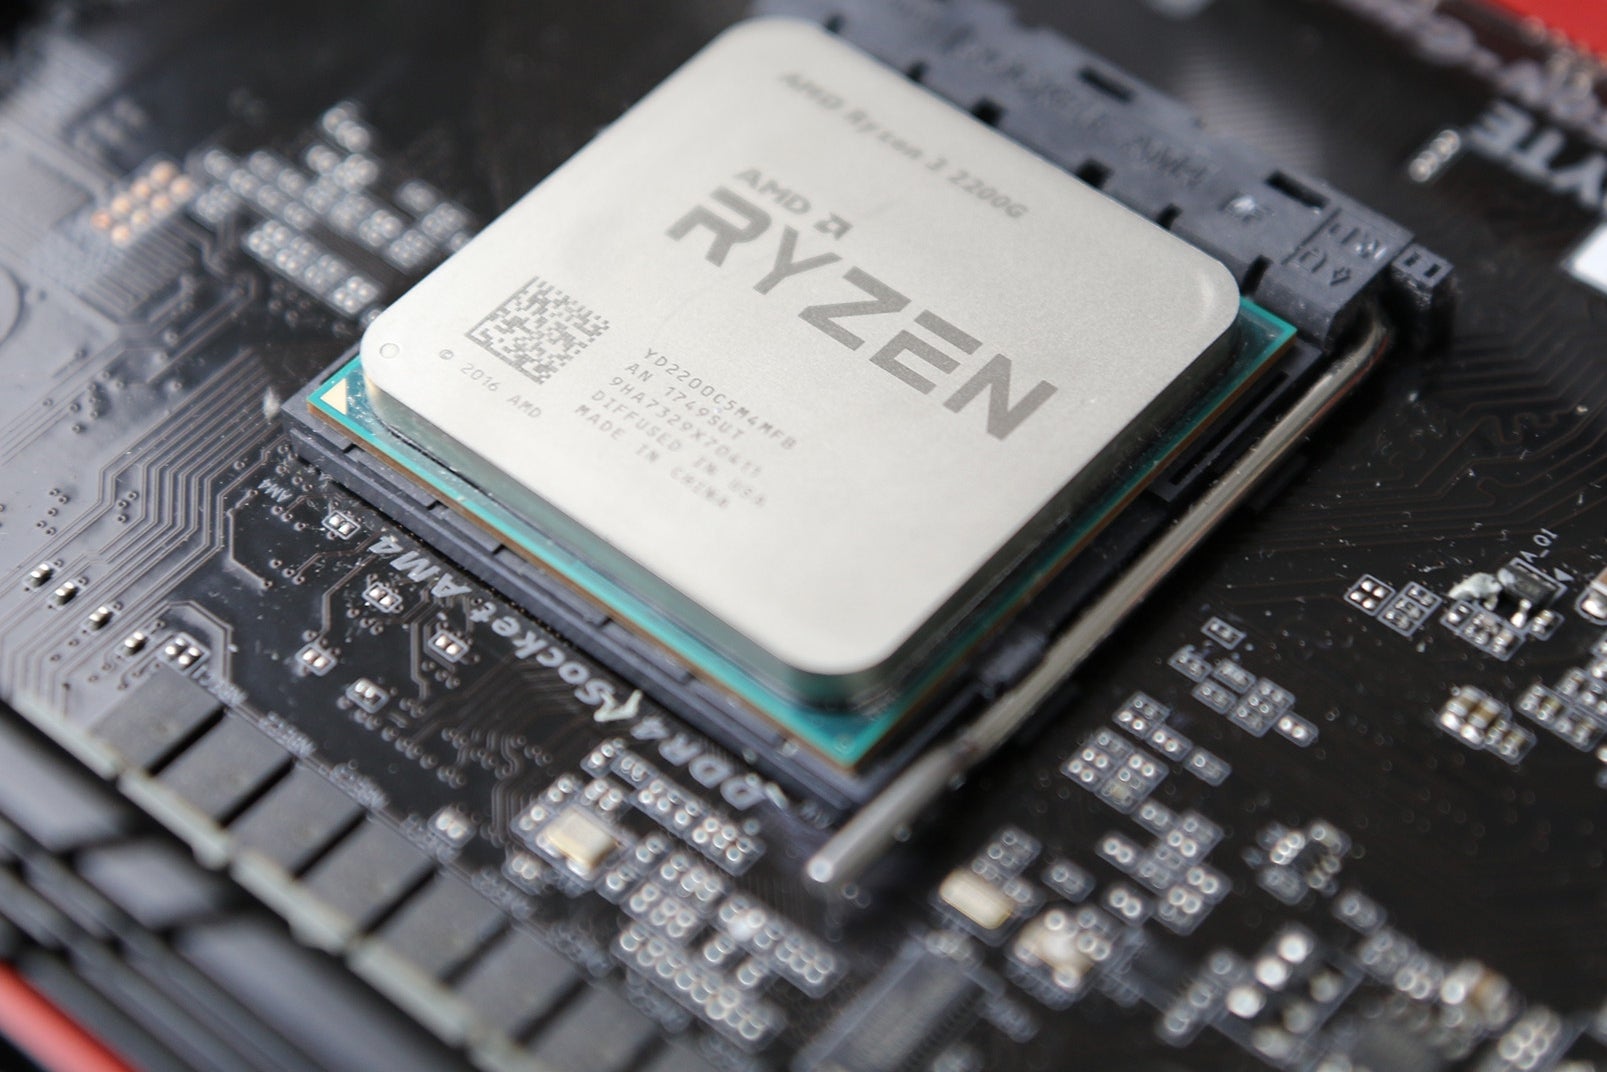 Ryzen 3 2200G/ Ryzen 5 2400G review: triple-A gaming without a